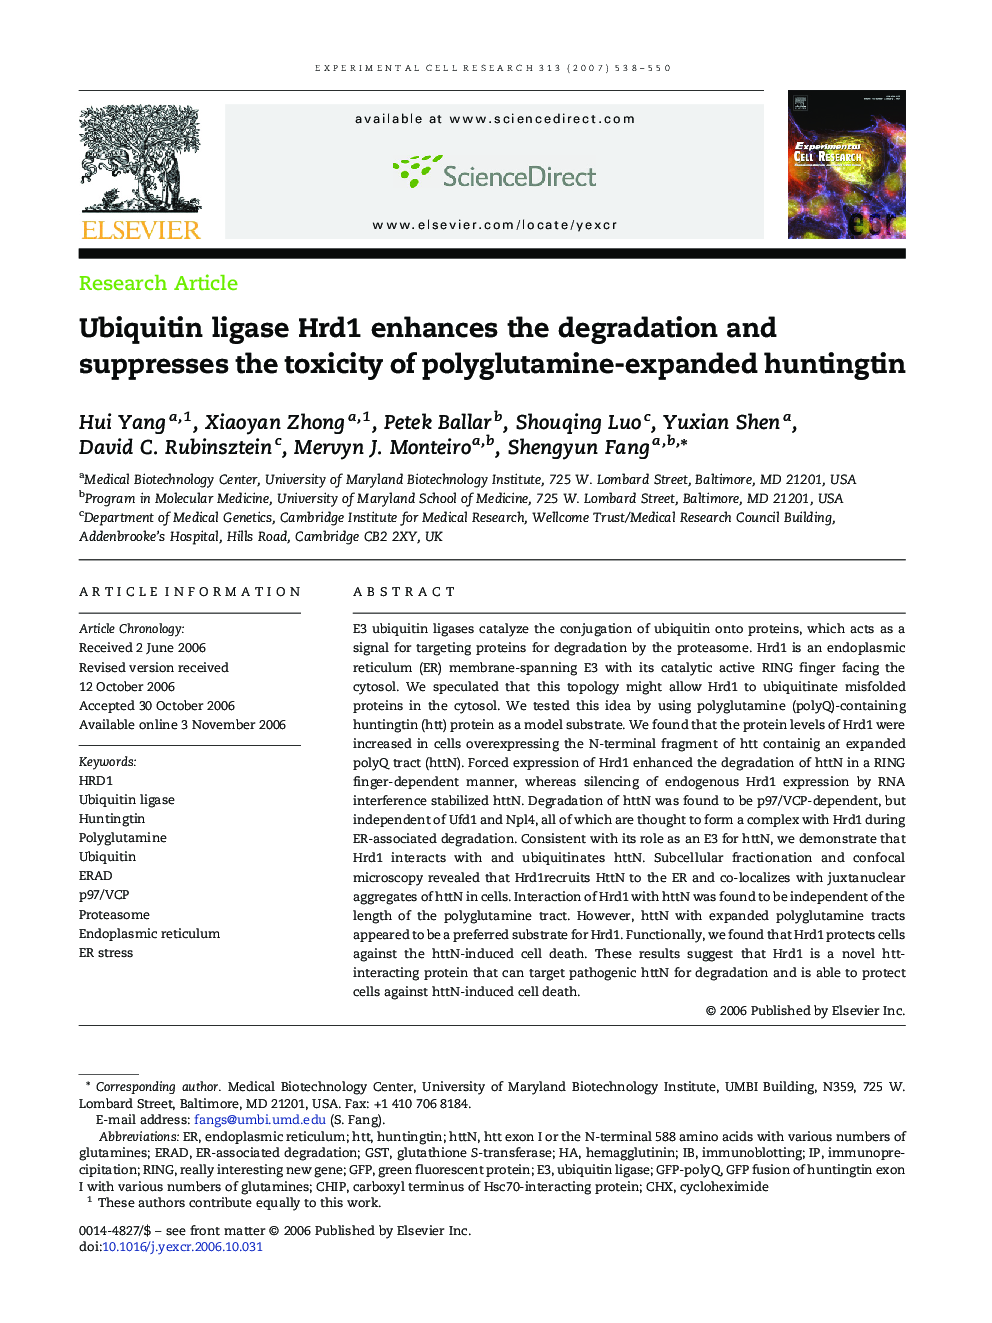 Ubiquitin ligase Hrd1 enhances the degradation and suppresses the toxicity of polyglutamine-expanded huntingtin